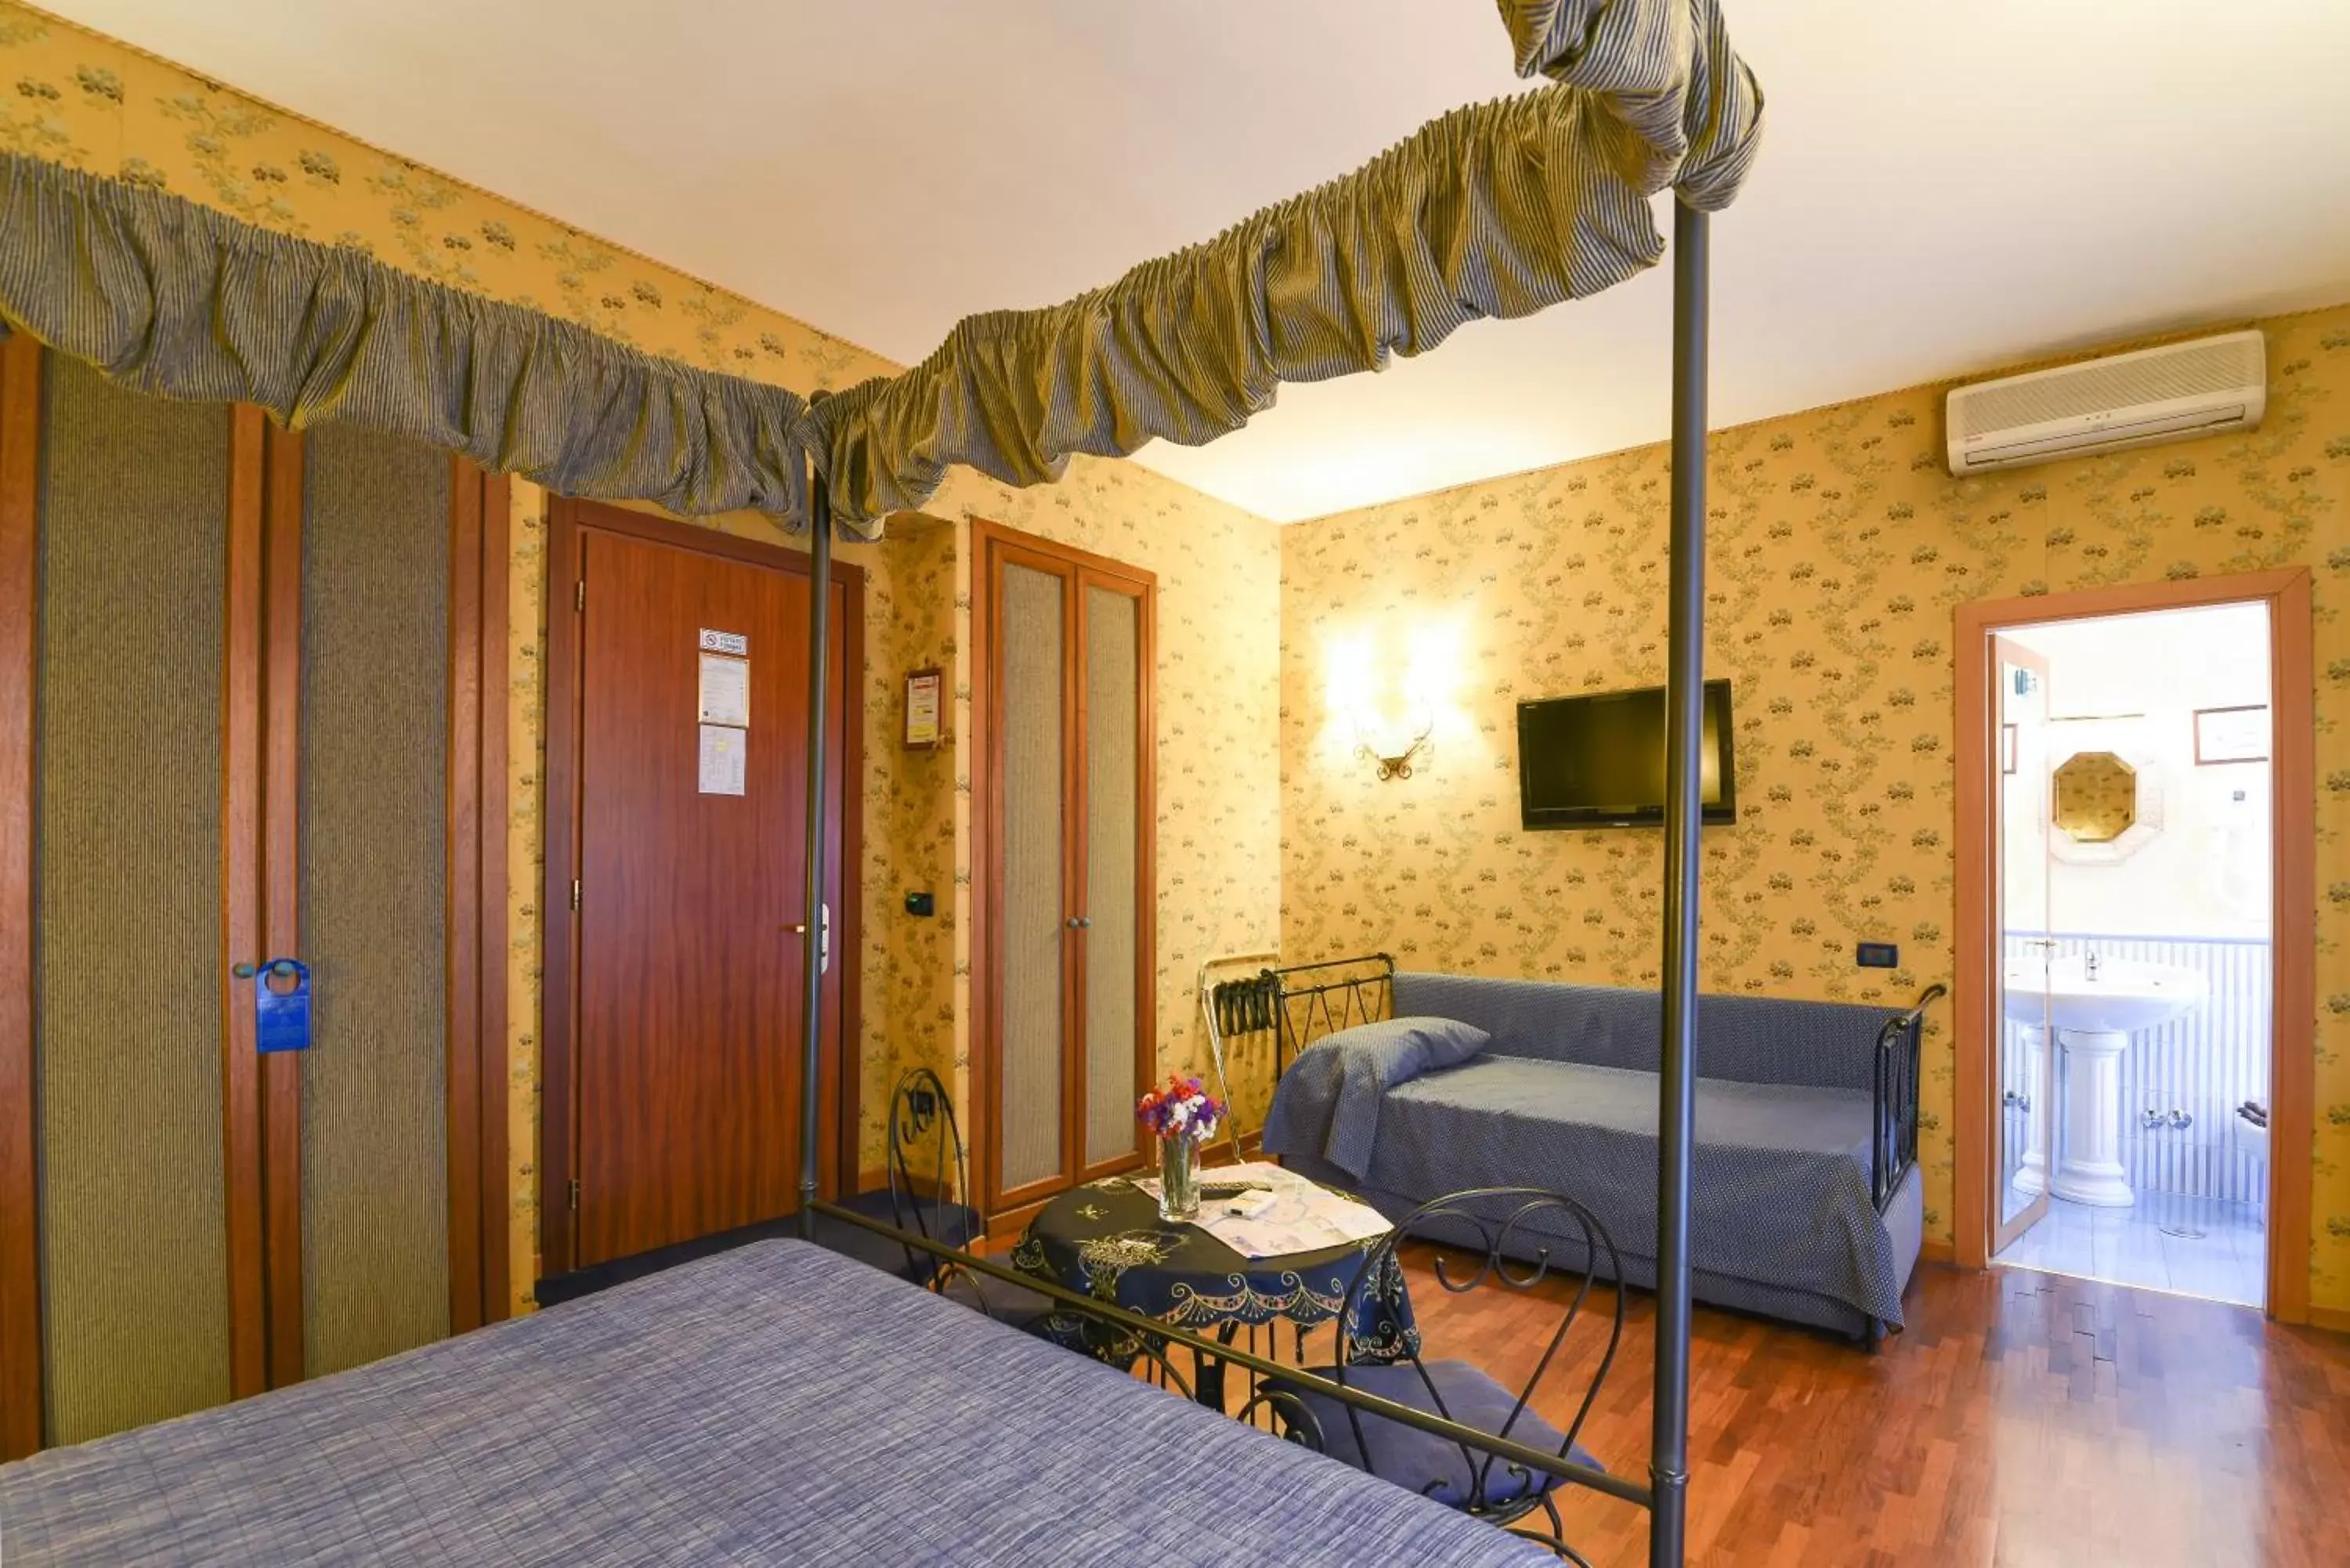 Bed, Room Photo in Residenza Ave Roma